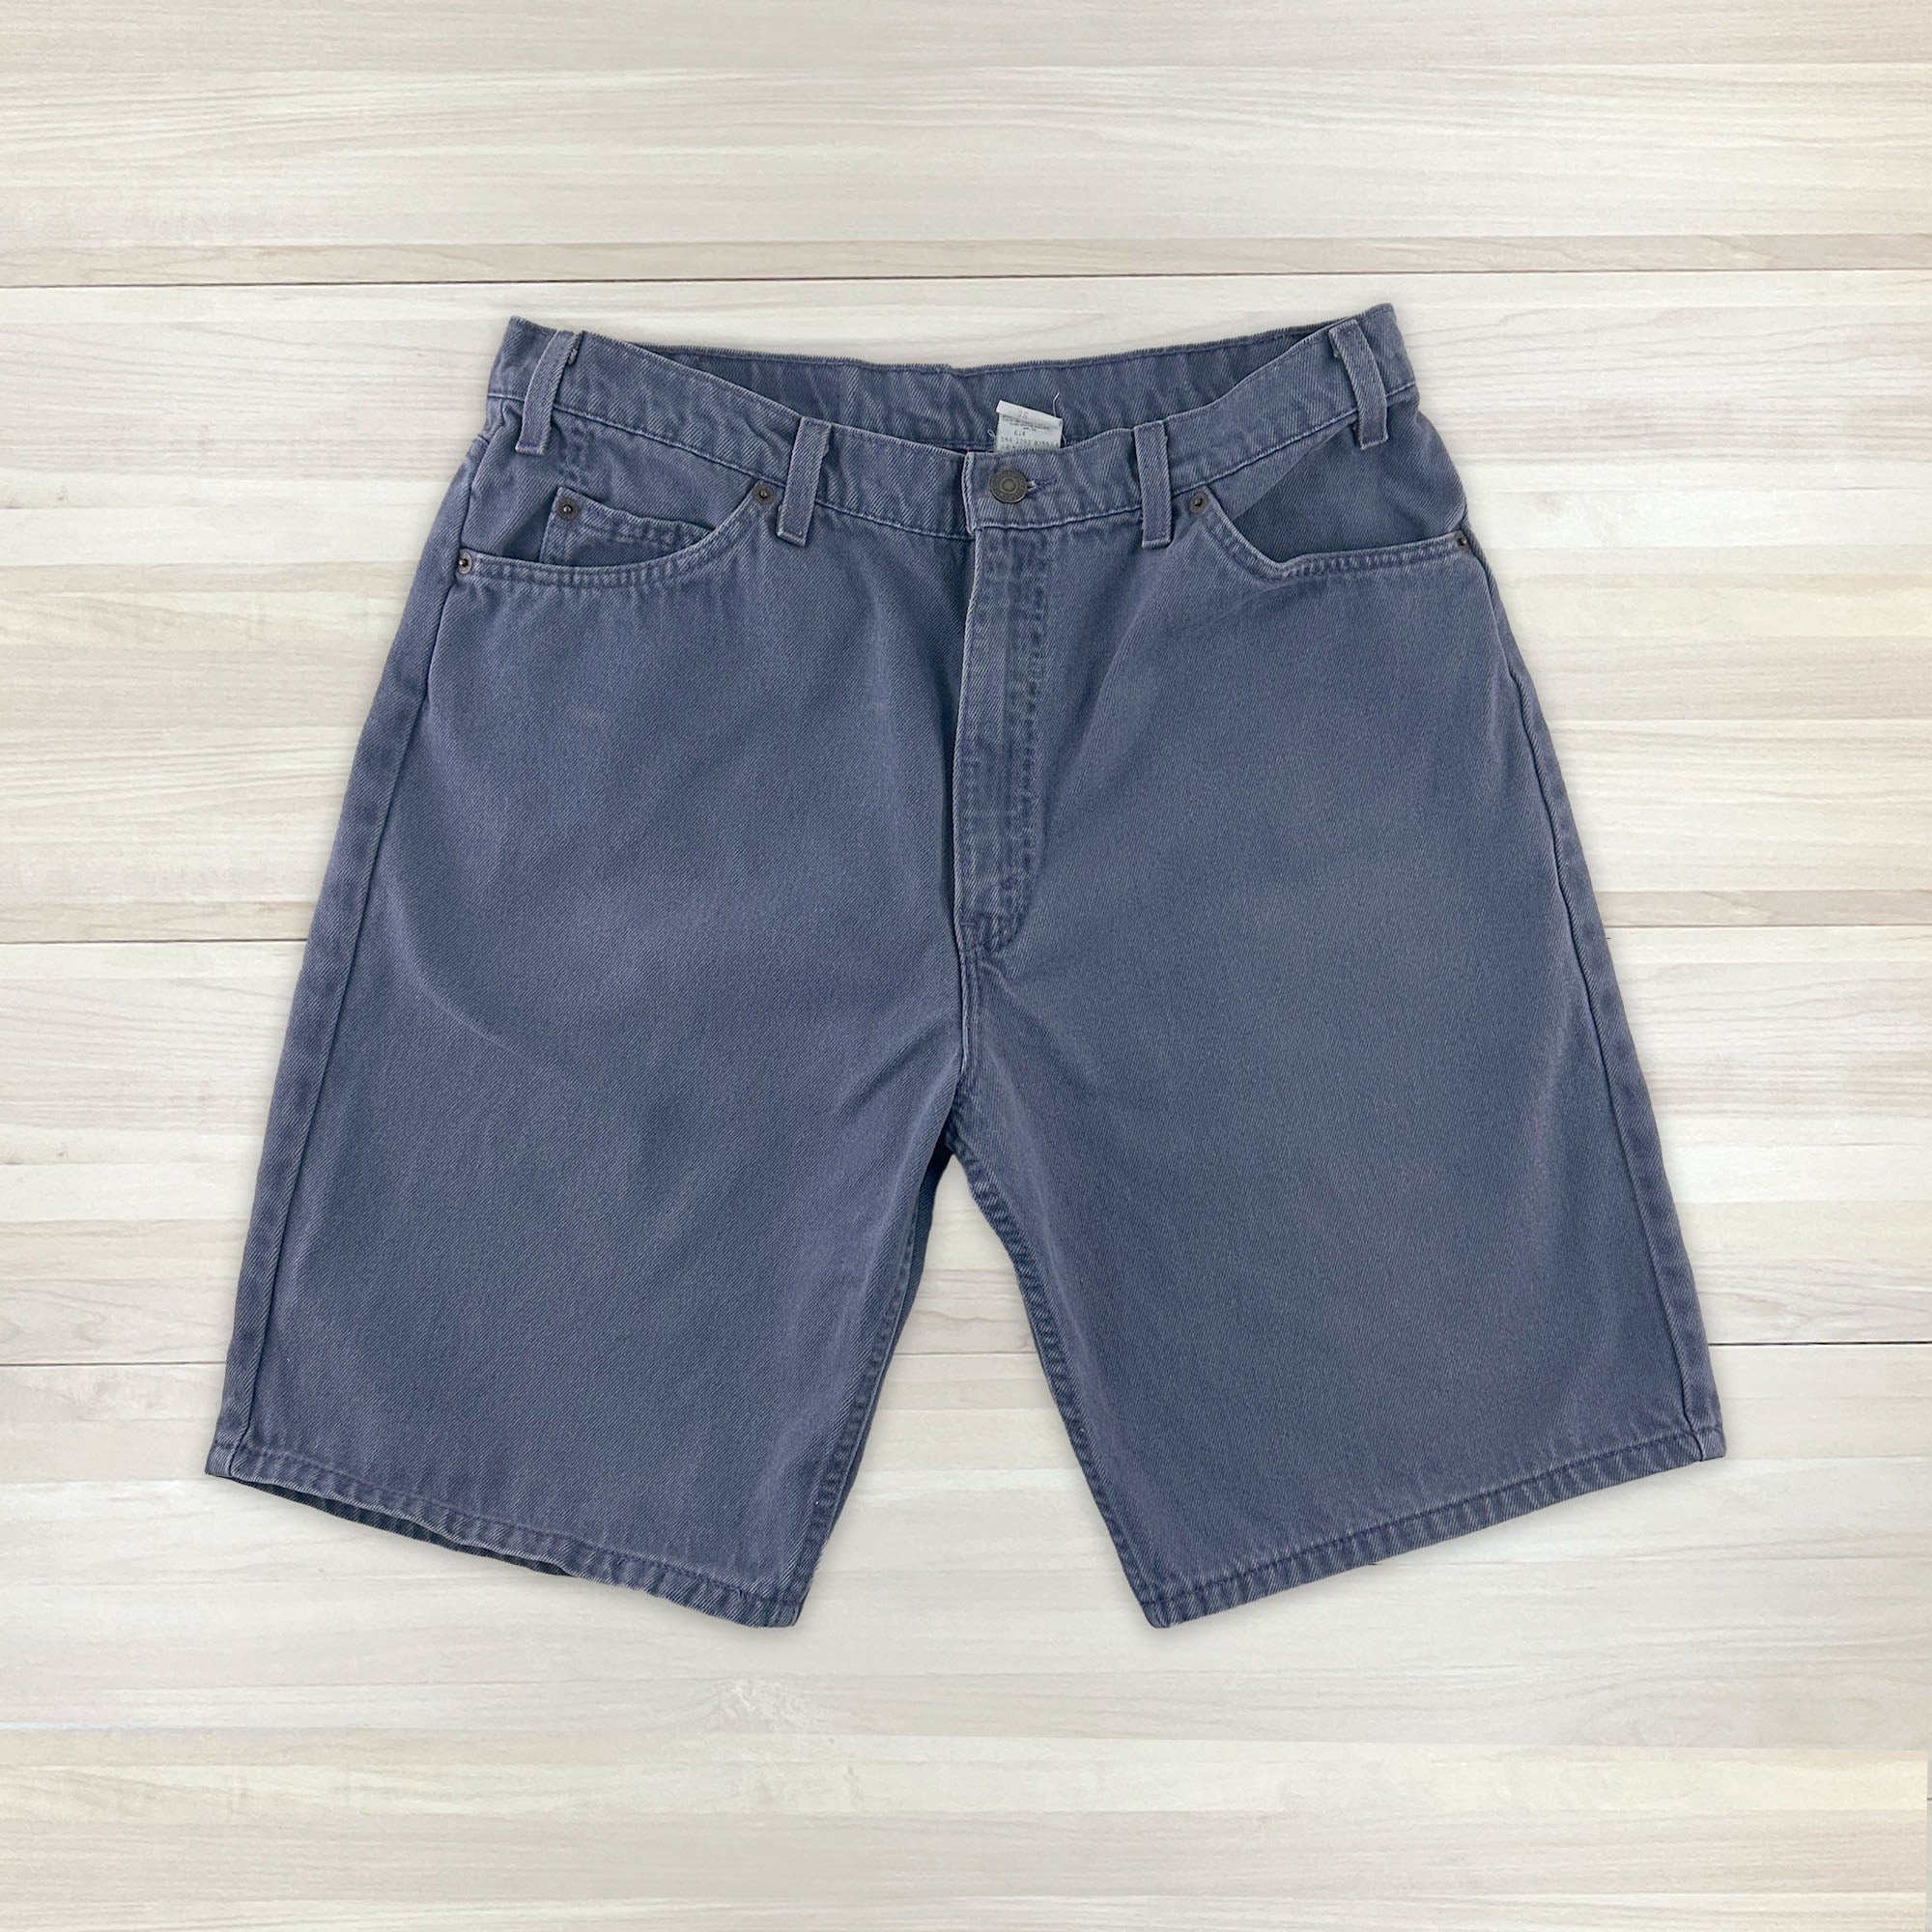 Men's Vintage Purple Levi's 550 Orange Tab Shorts - Measures 35x10-1